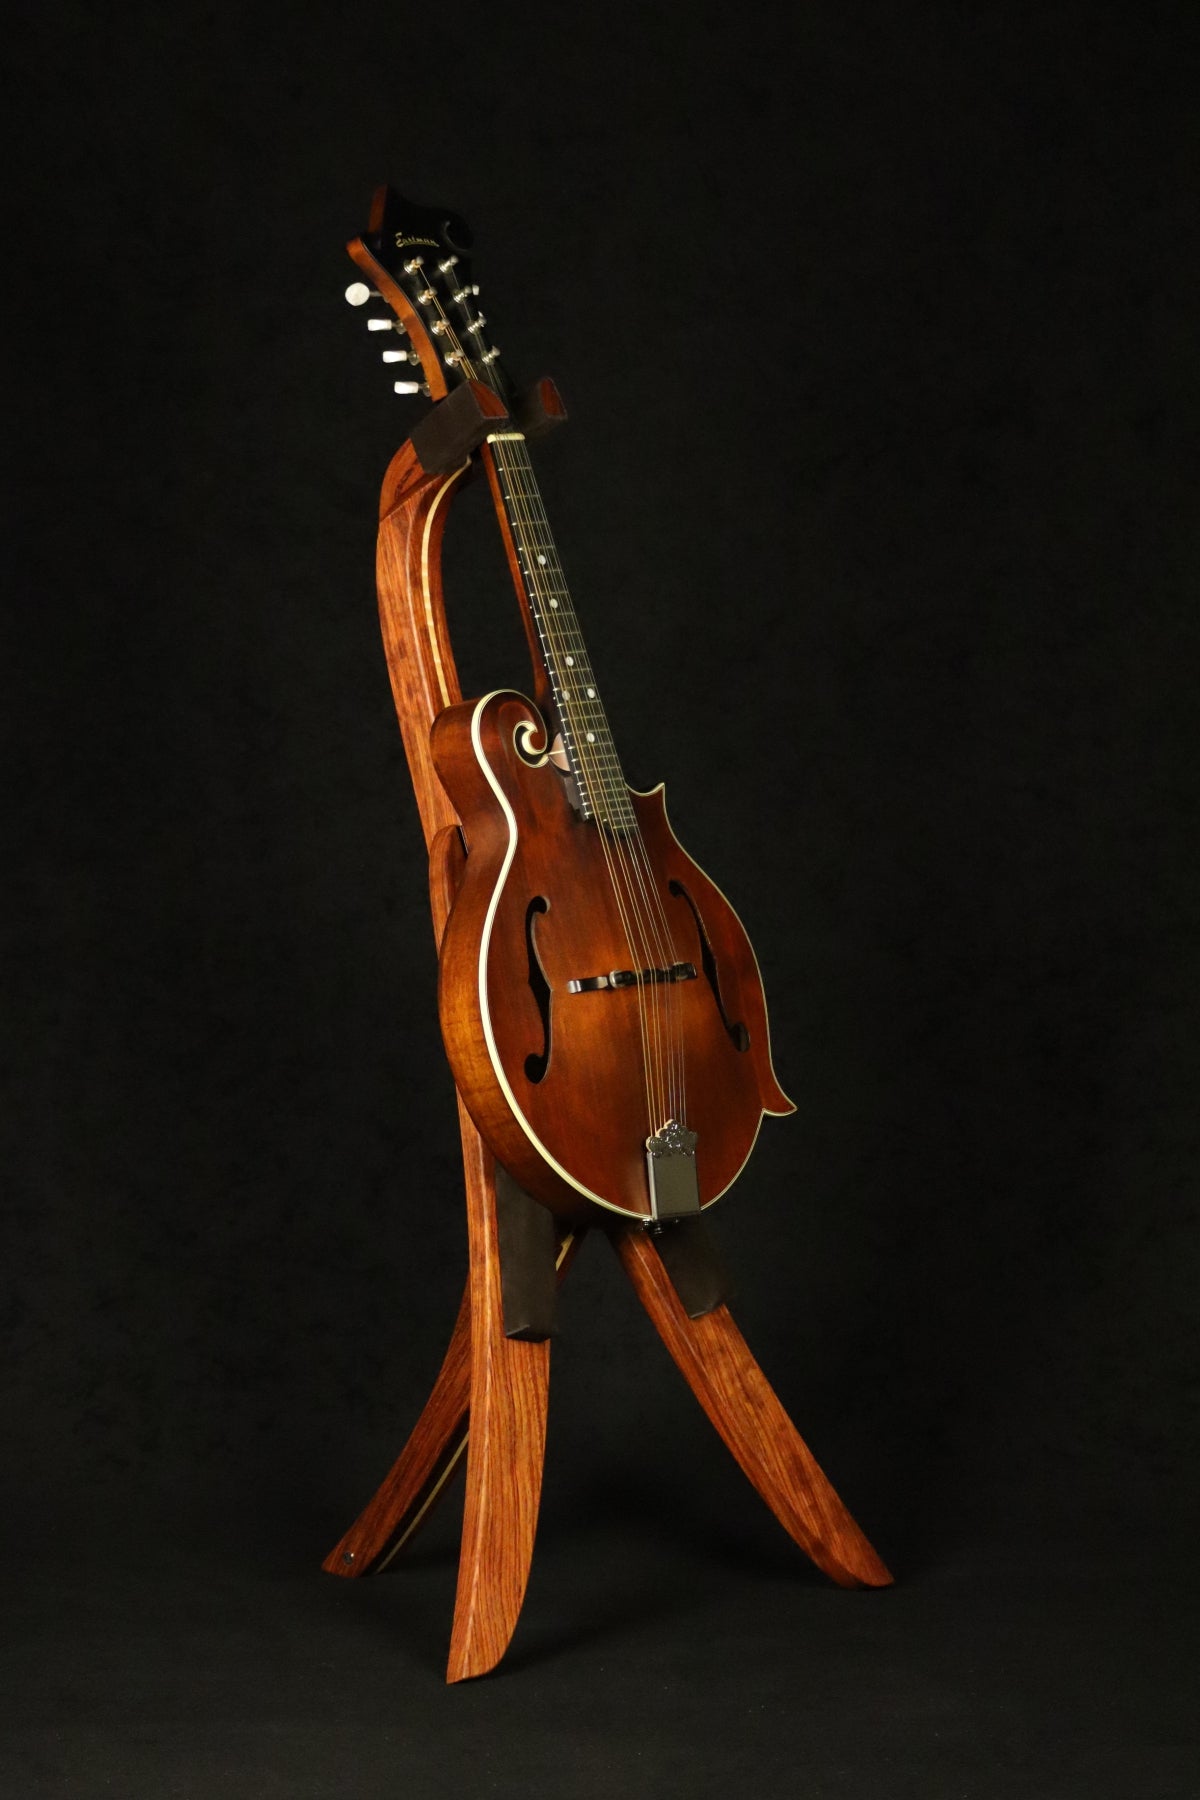 Folding bubinga rosewood and curly maple wood mandolin floor stand full front image with Eastman mandolin